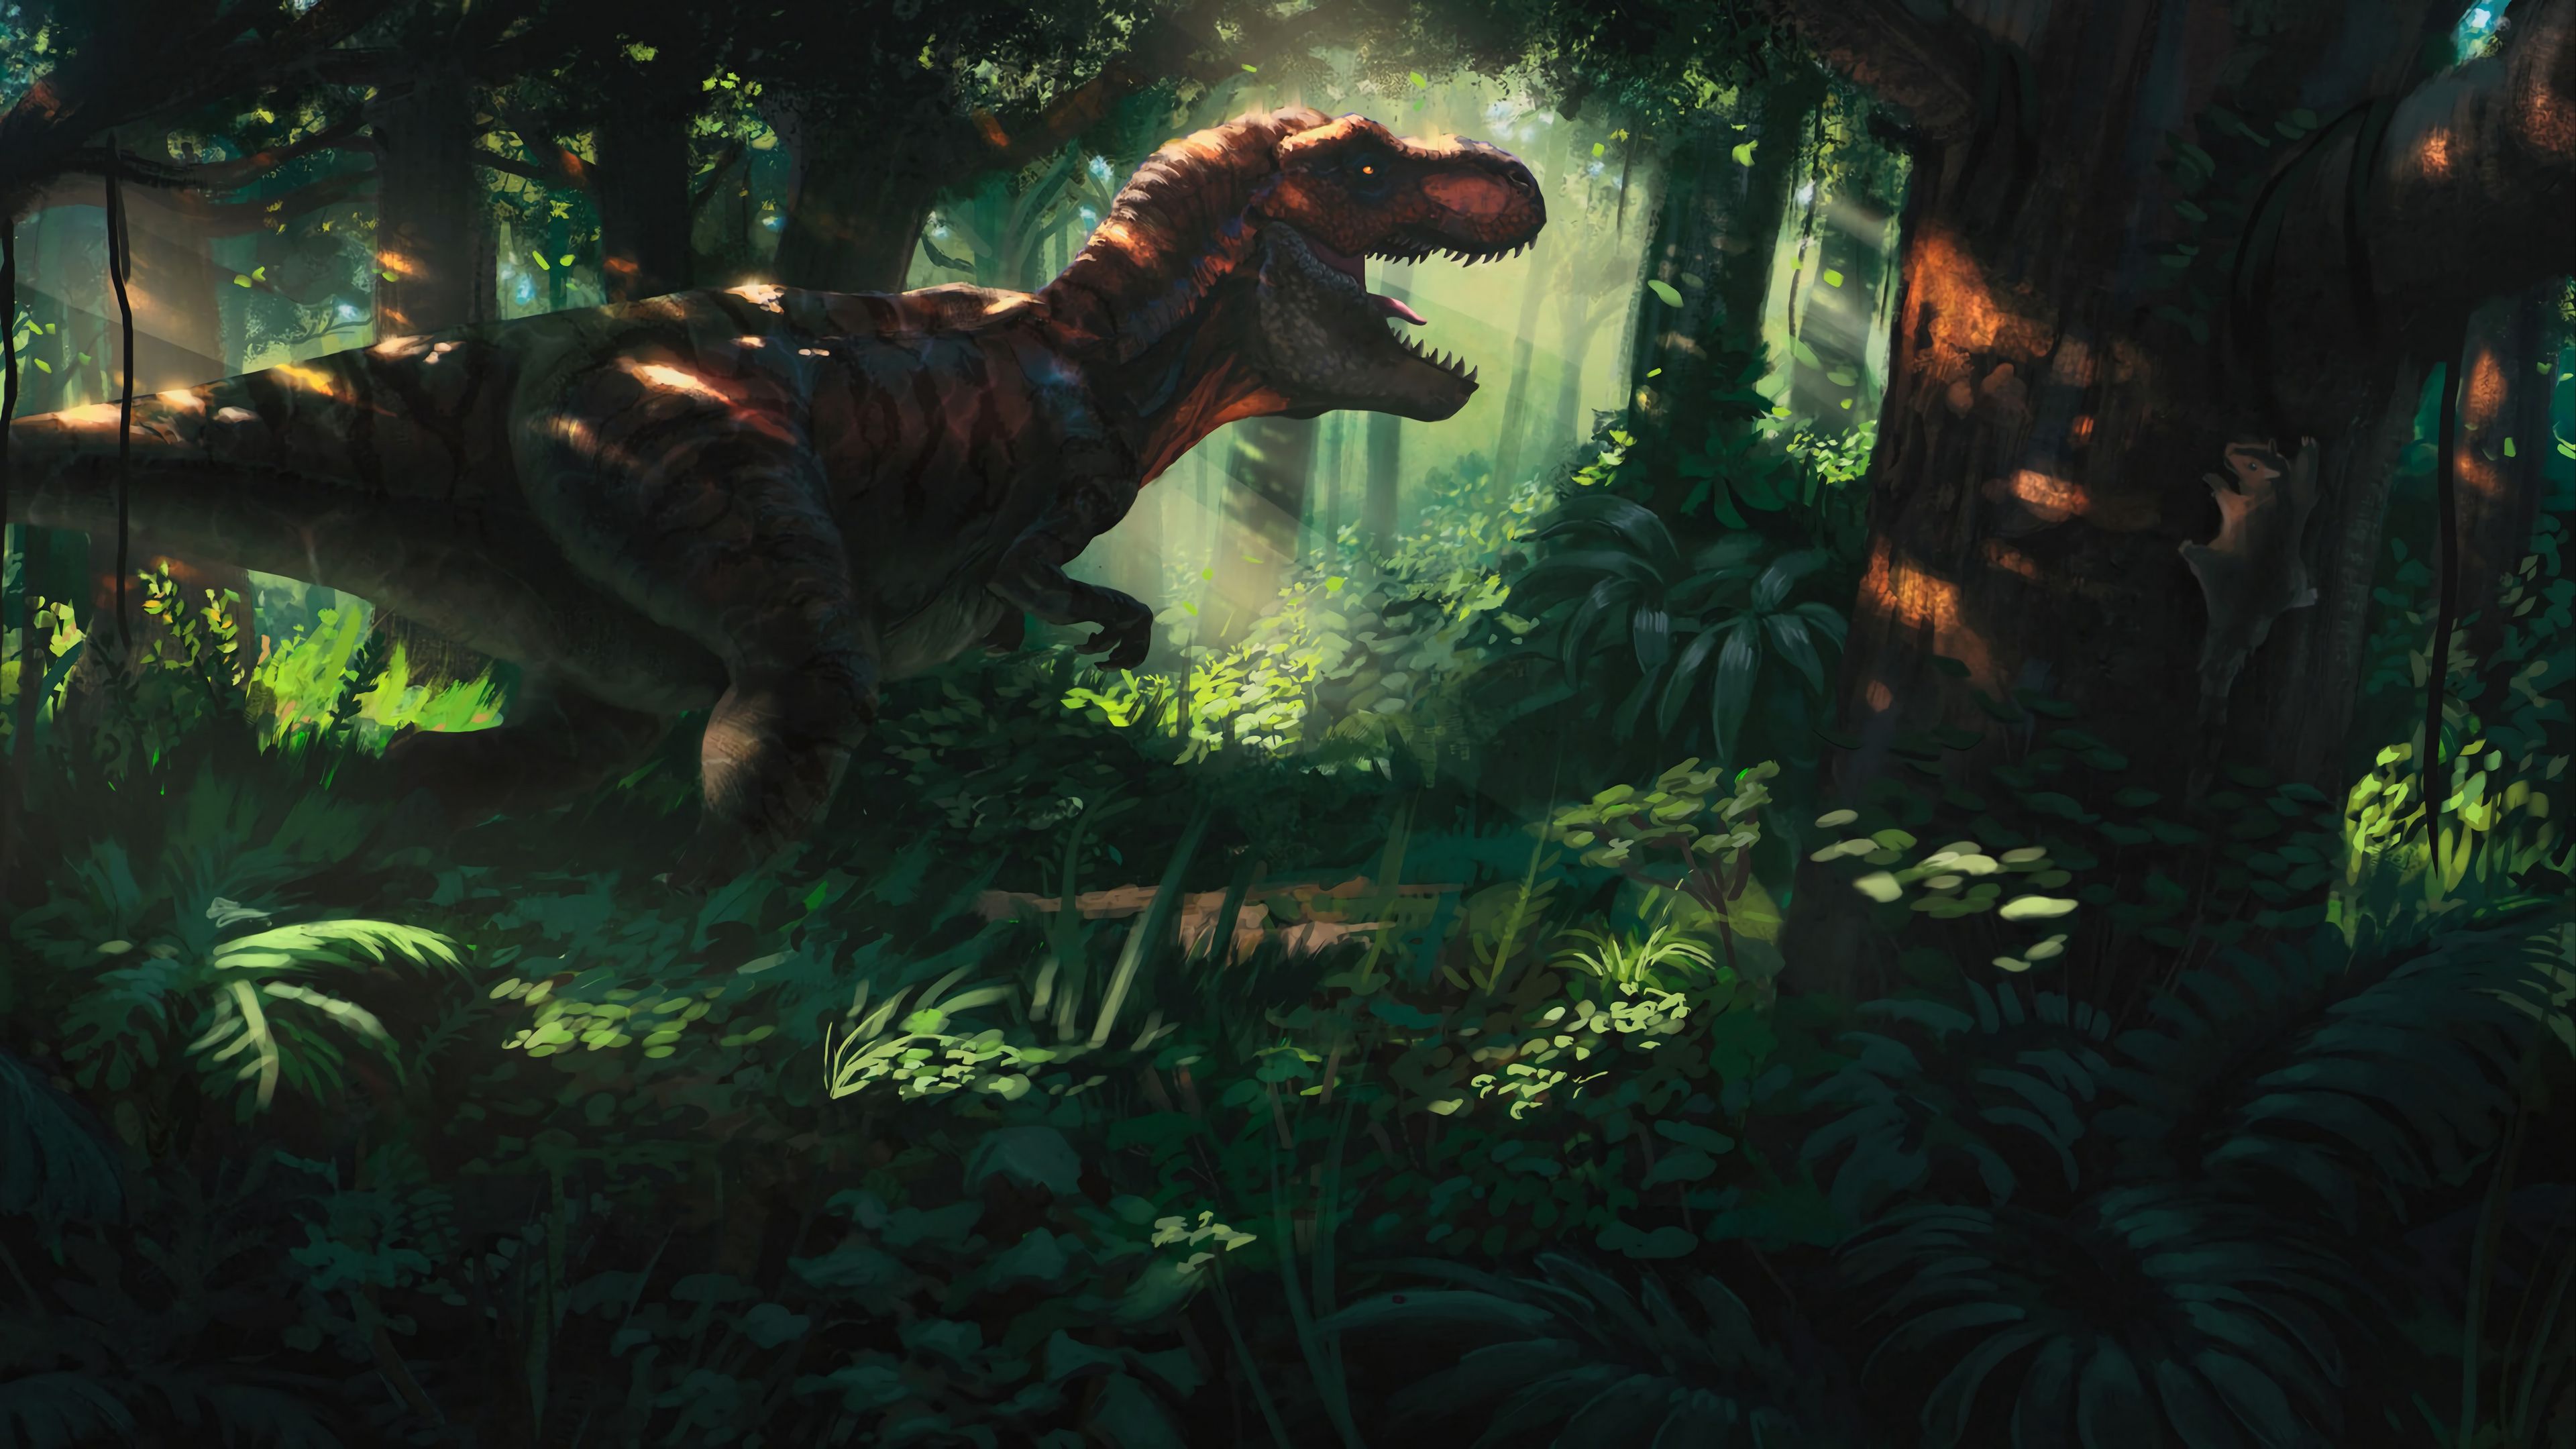 5792x3692 Wallpaper Tyrannosaurus, T-Rex, HD, 5K, Creative Graphics, #3929  | Digital backdrops, Dinosaur wallpaper, Forest wall art